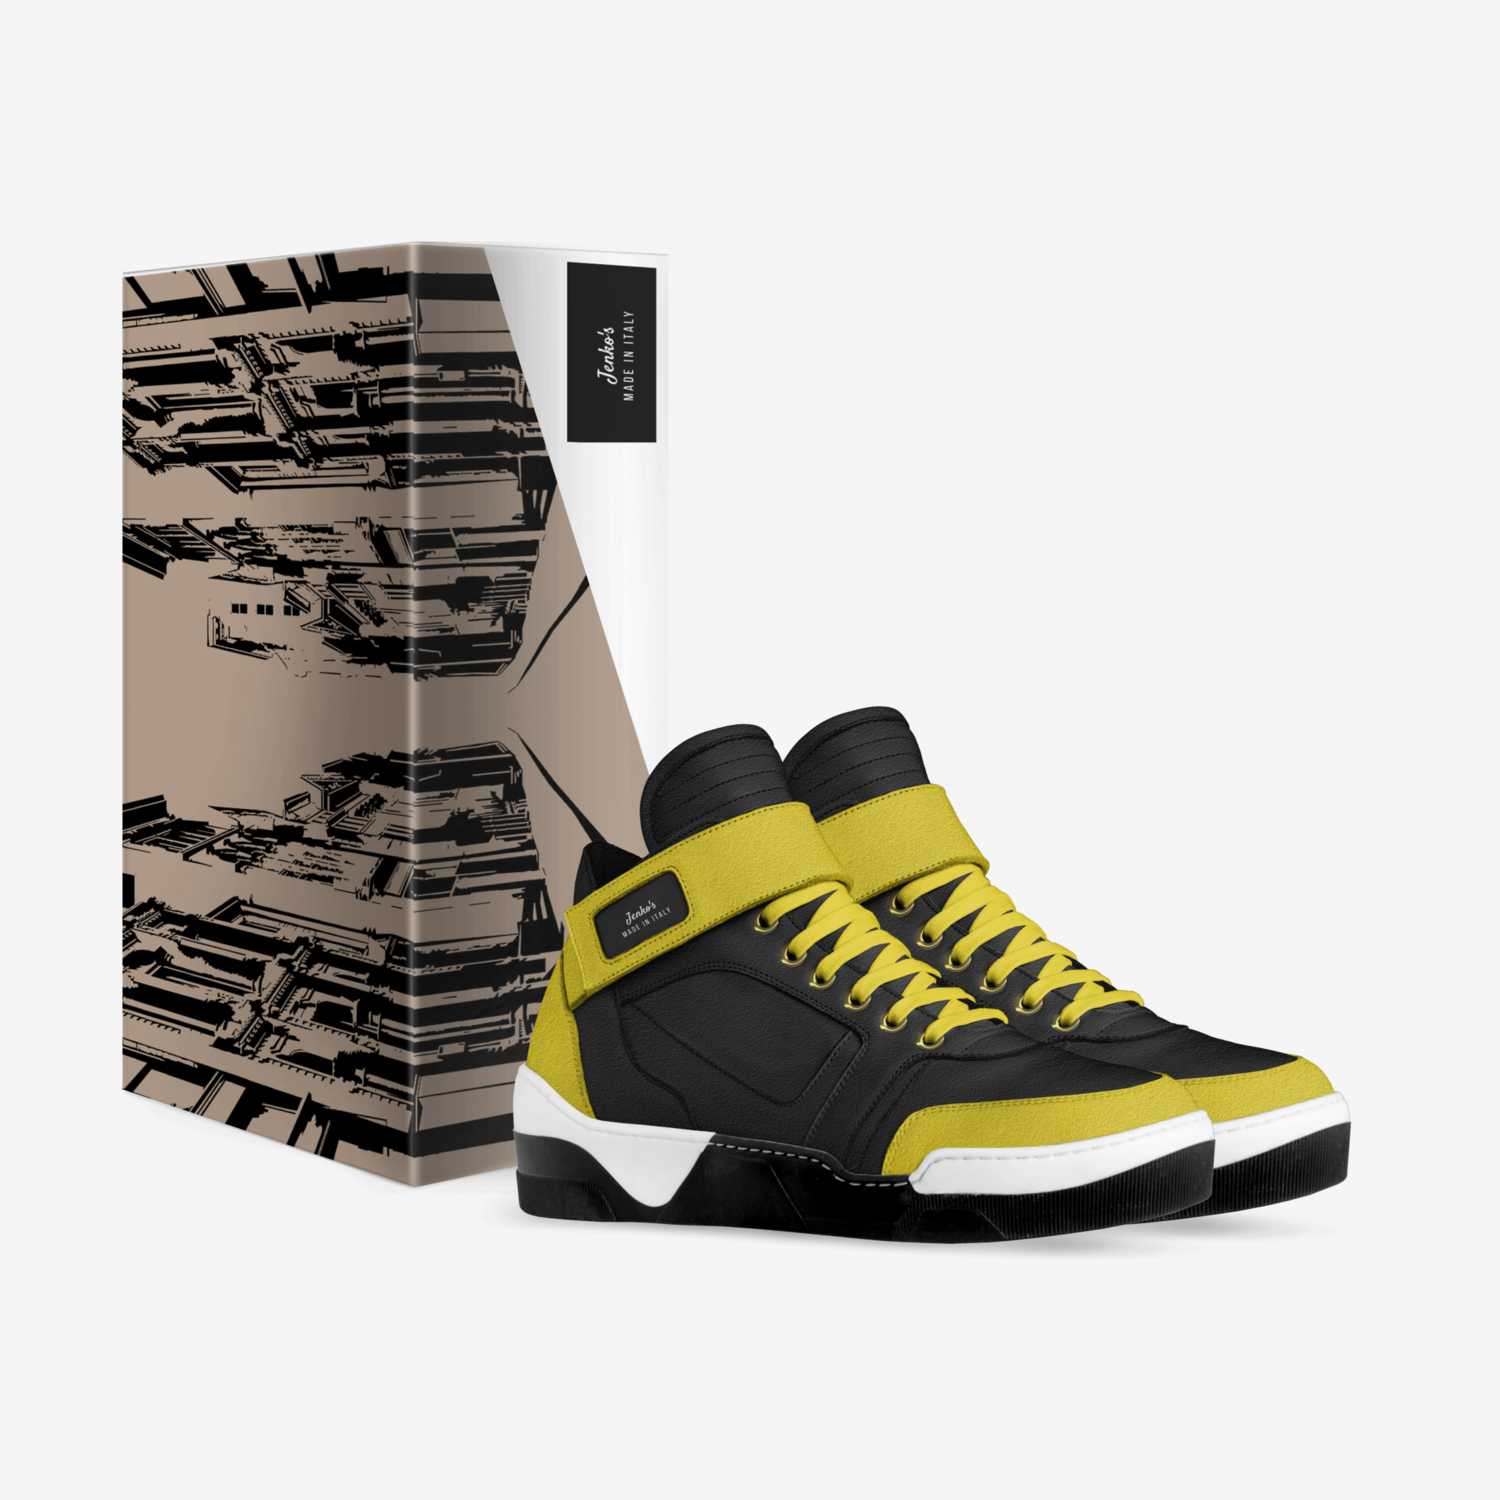 Jenko's custom made in Italy shoes by Eyoel Alebachew | Box view